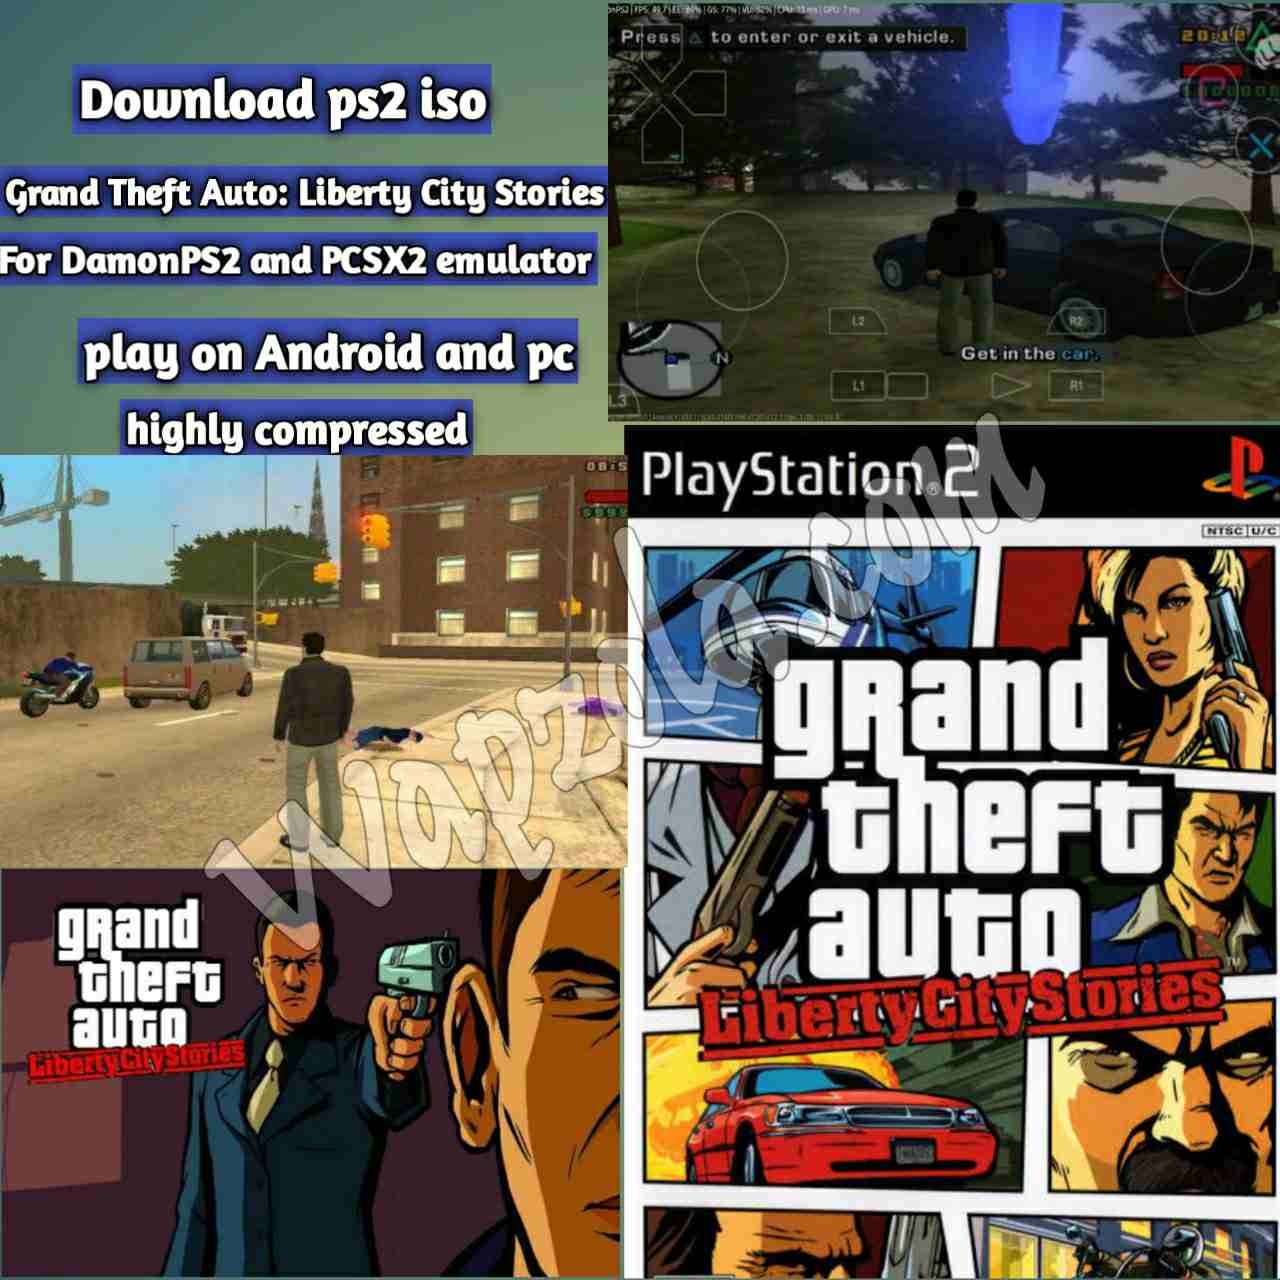 Download] Grand Theft Auto: Liberty City Stories DamonPS2